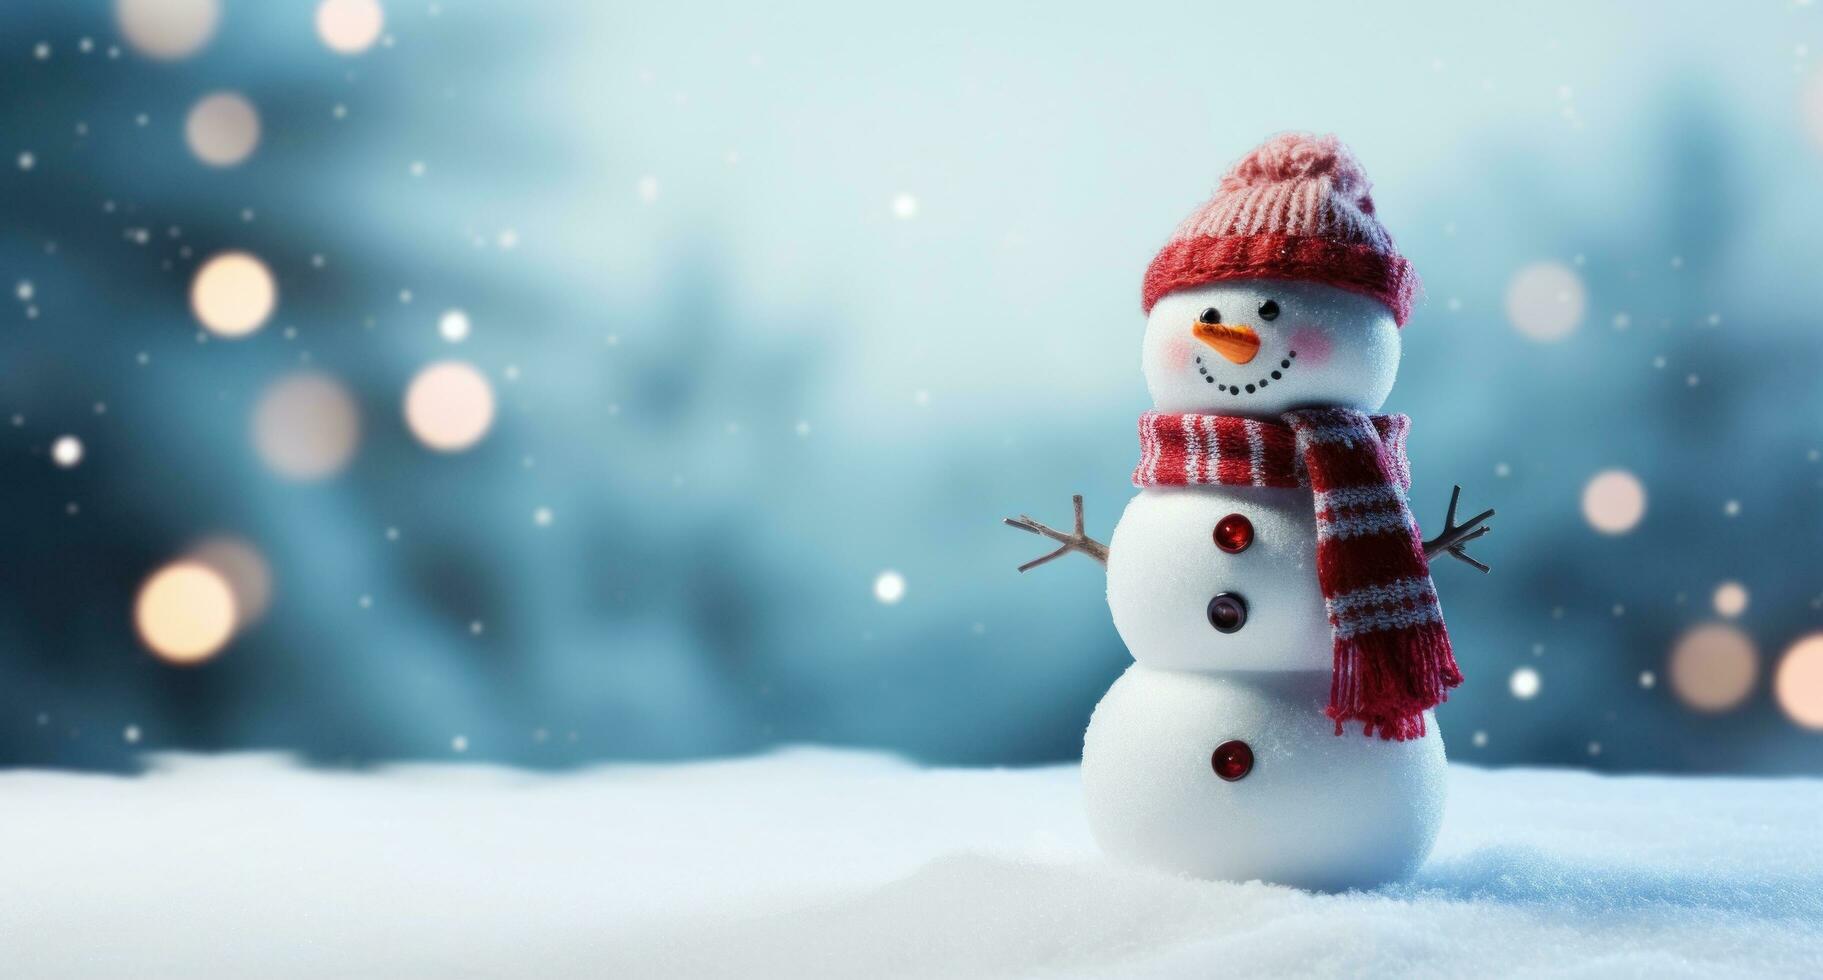 Winter snowman background 27247974 Stock Photo at Vecteezy